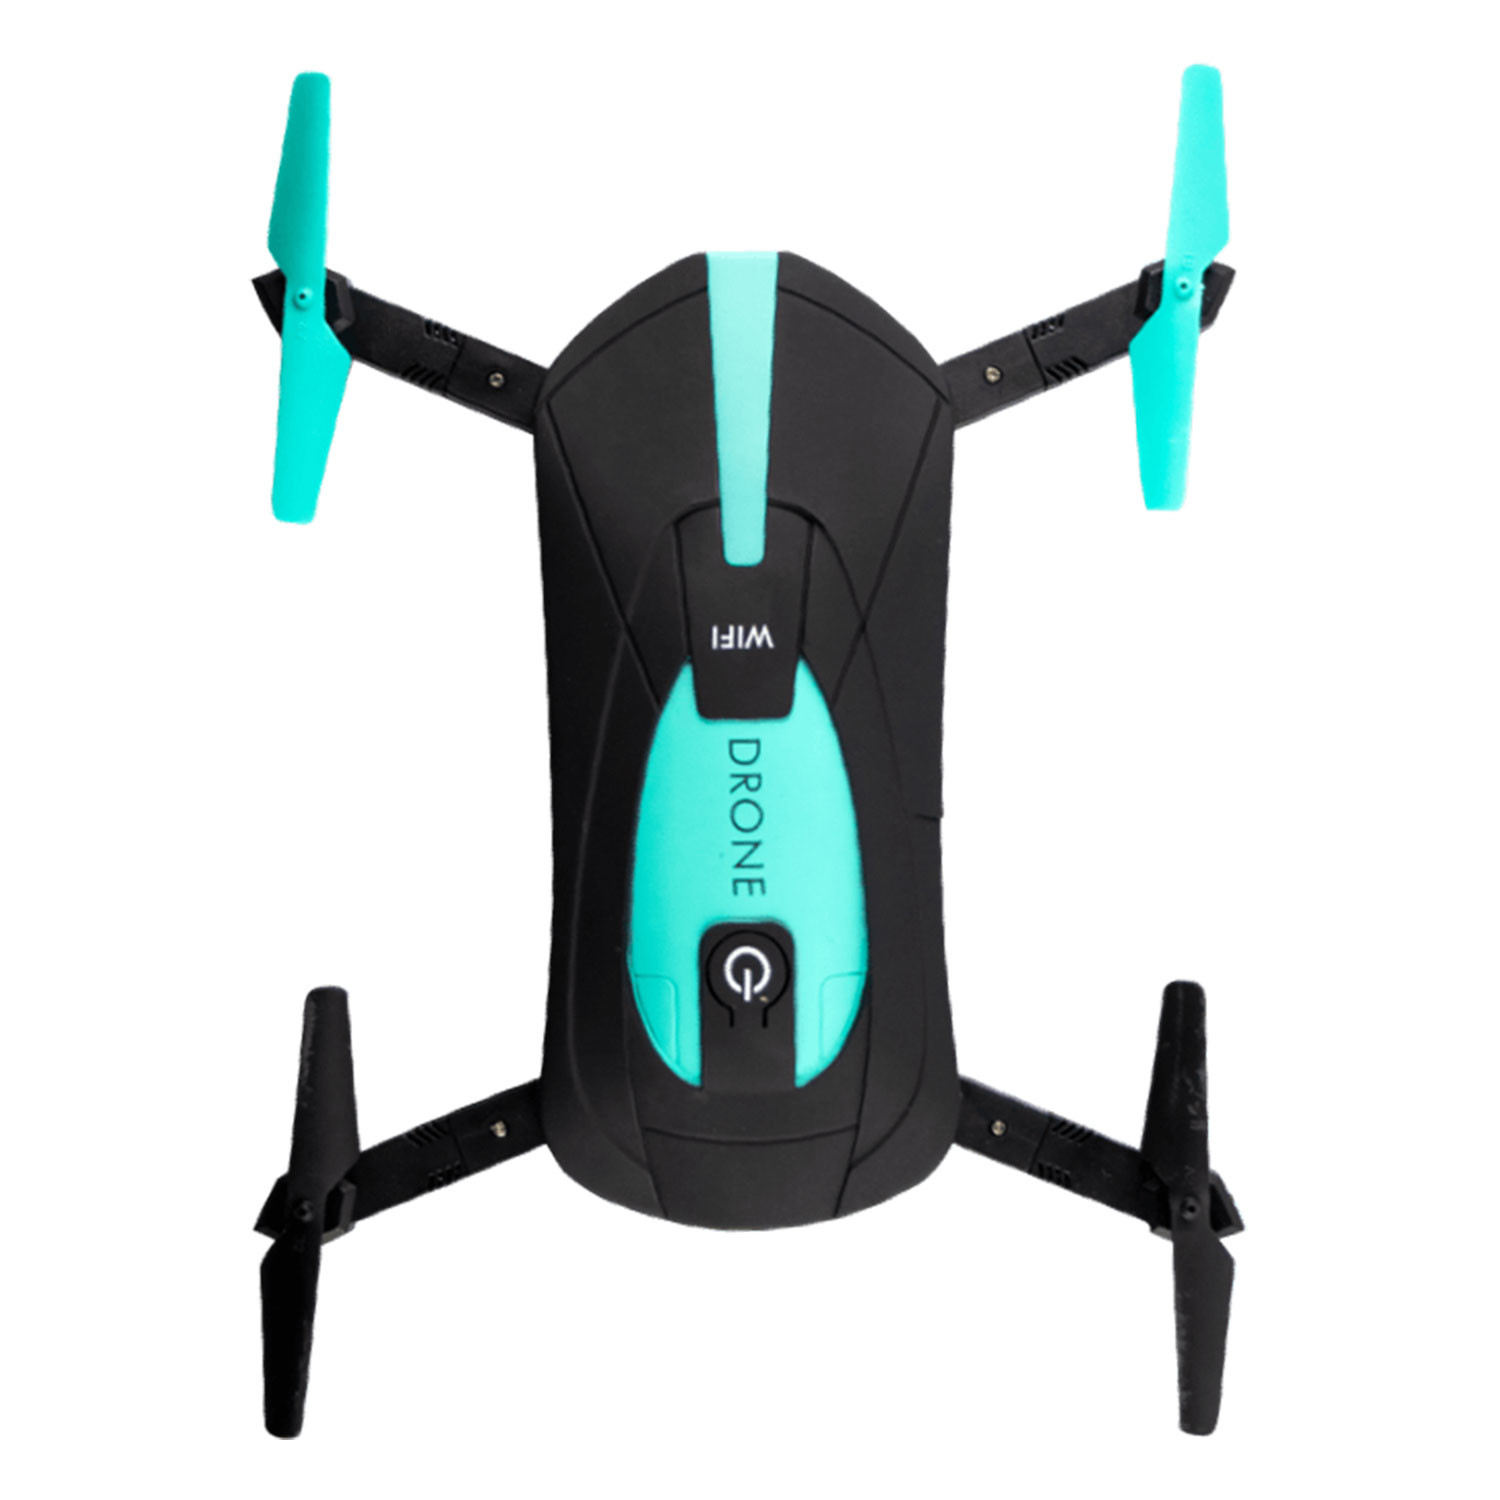 skycam hd wifi drone review